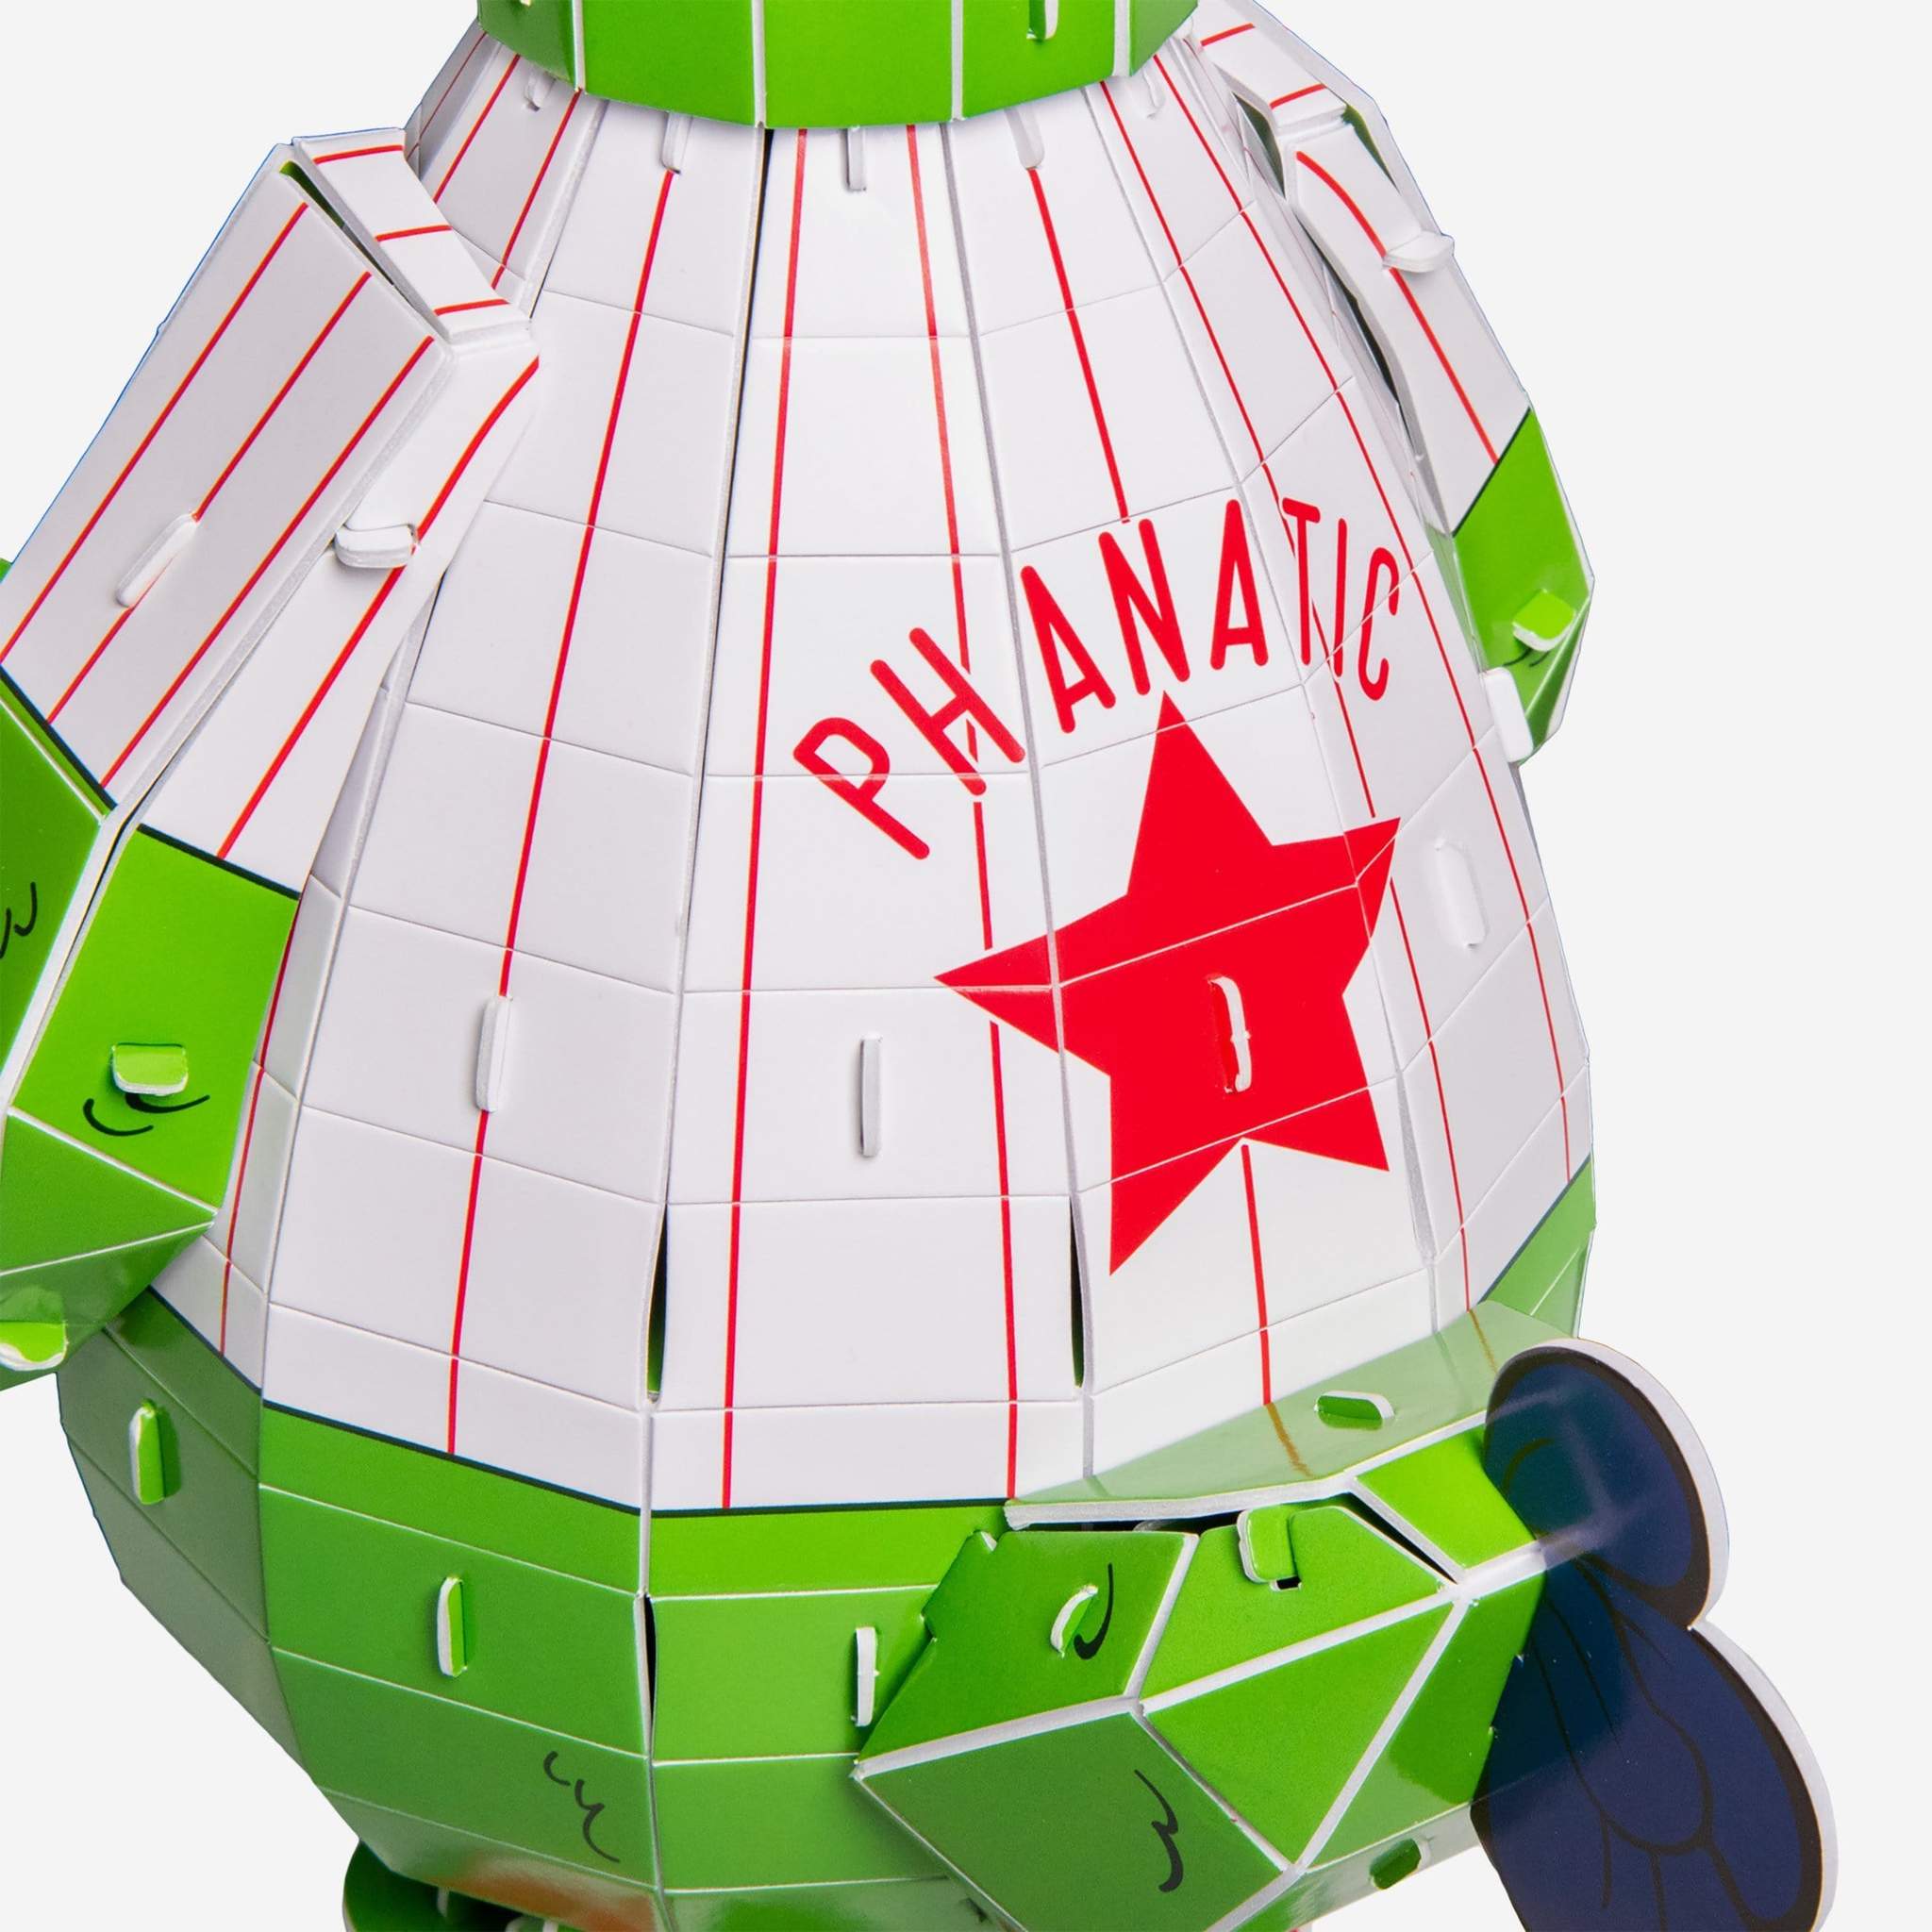 Phillies Phanatic Mascot Imprint Franklin Tee – Mixed Threads